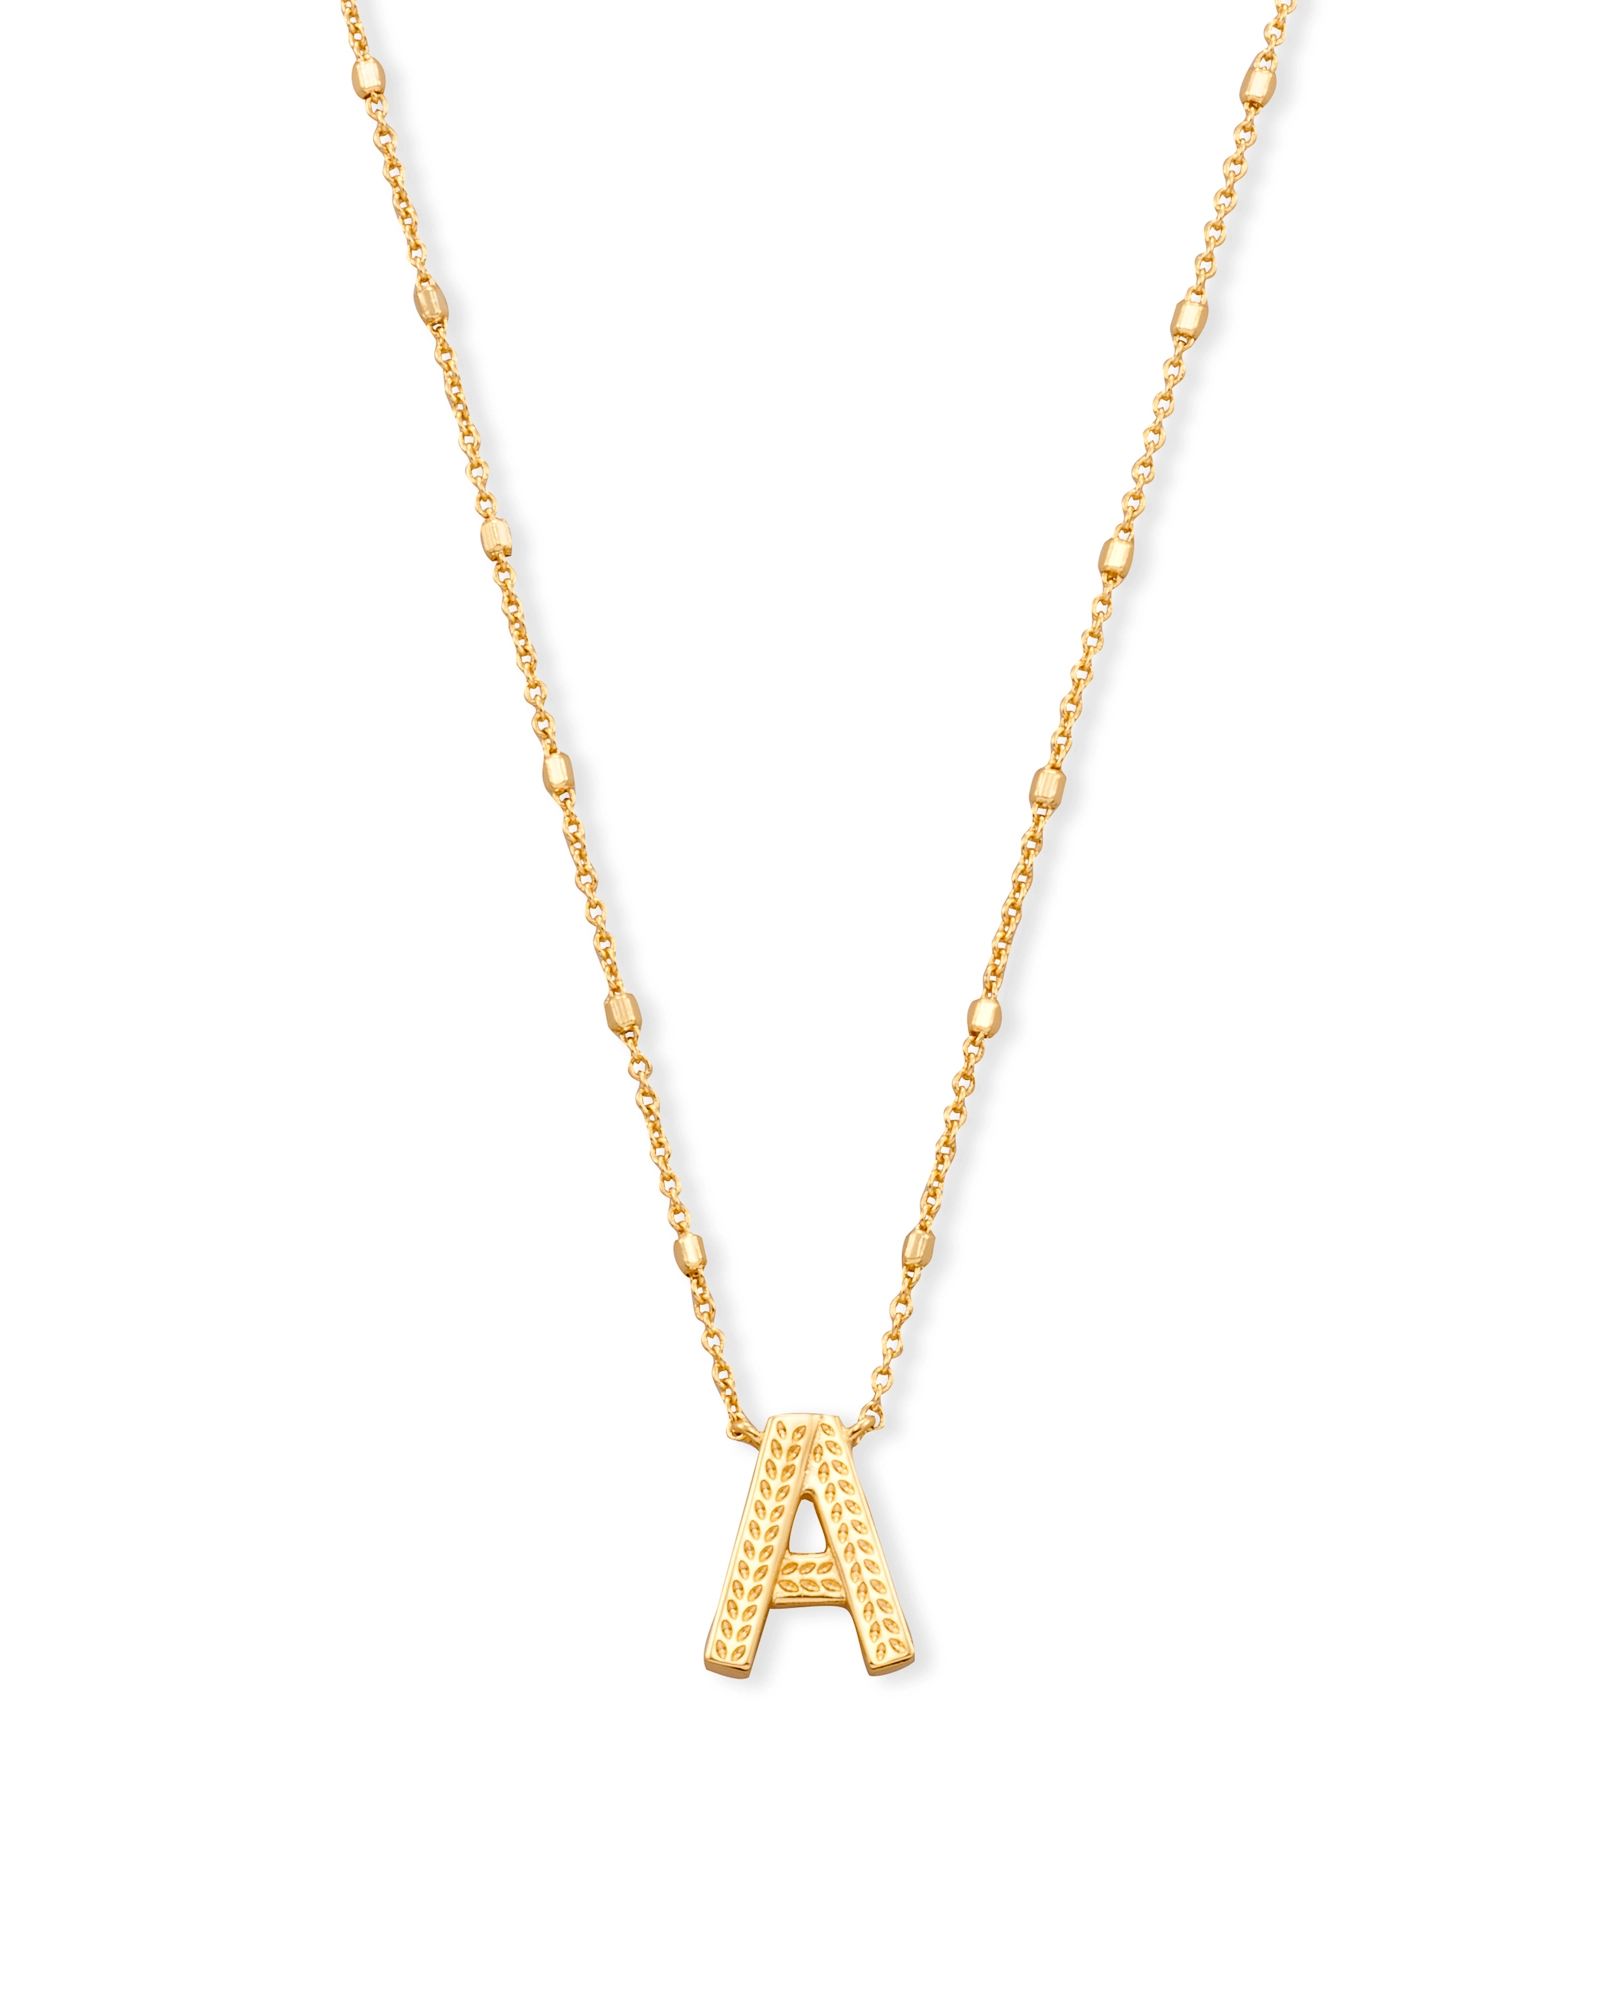 Letter A Pendant Necklace in Gold | Kendra Scott | Kendra Scott